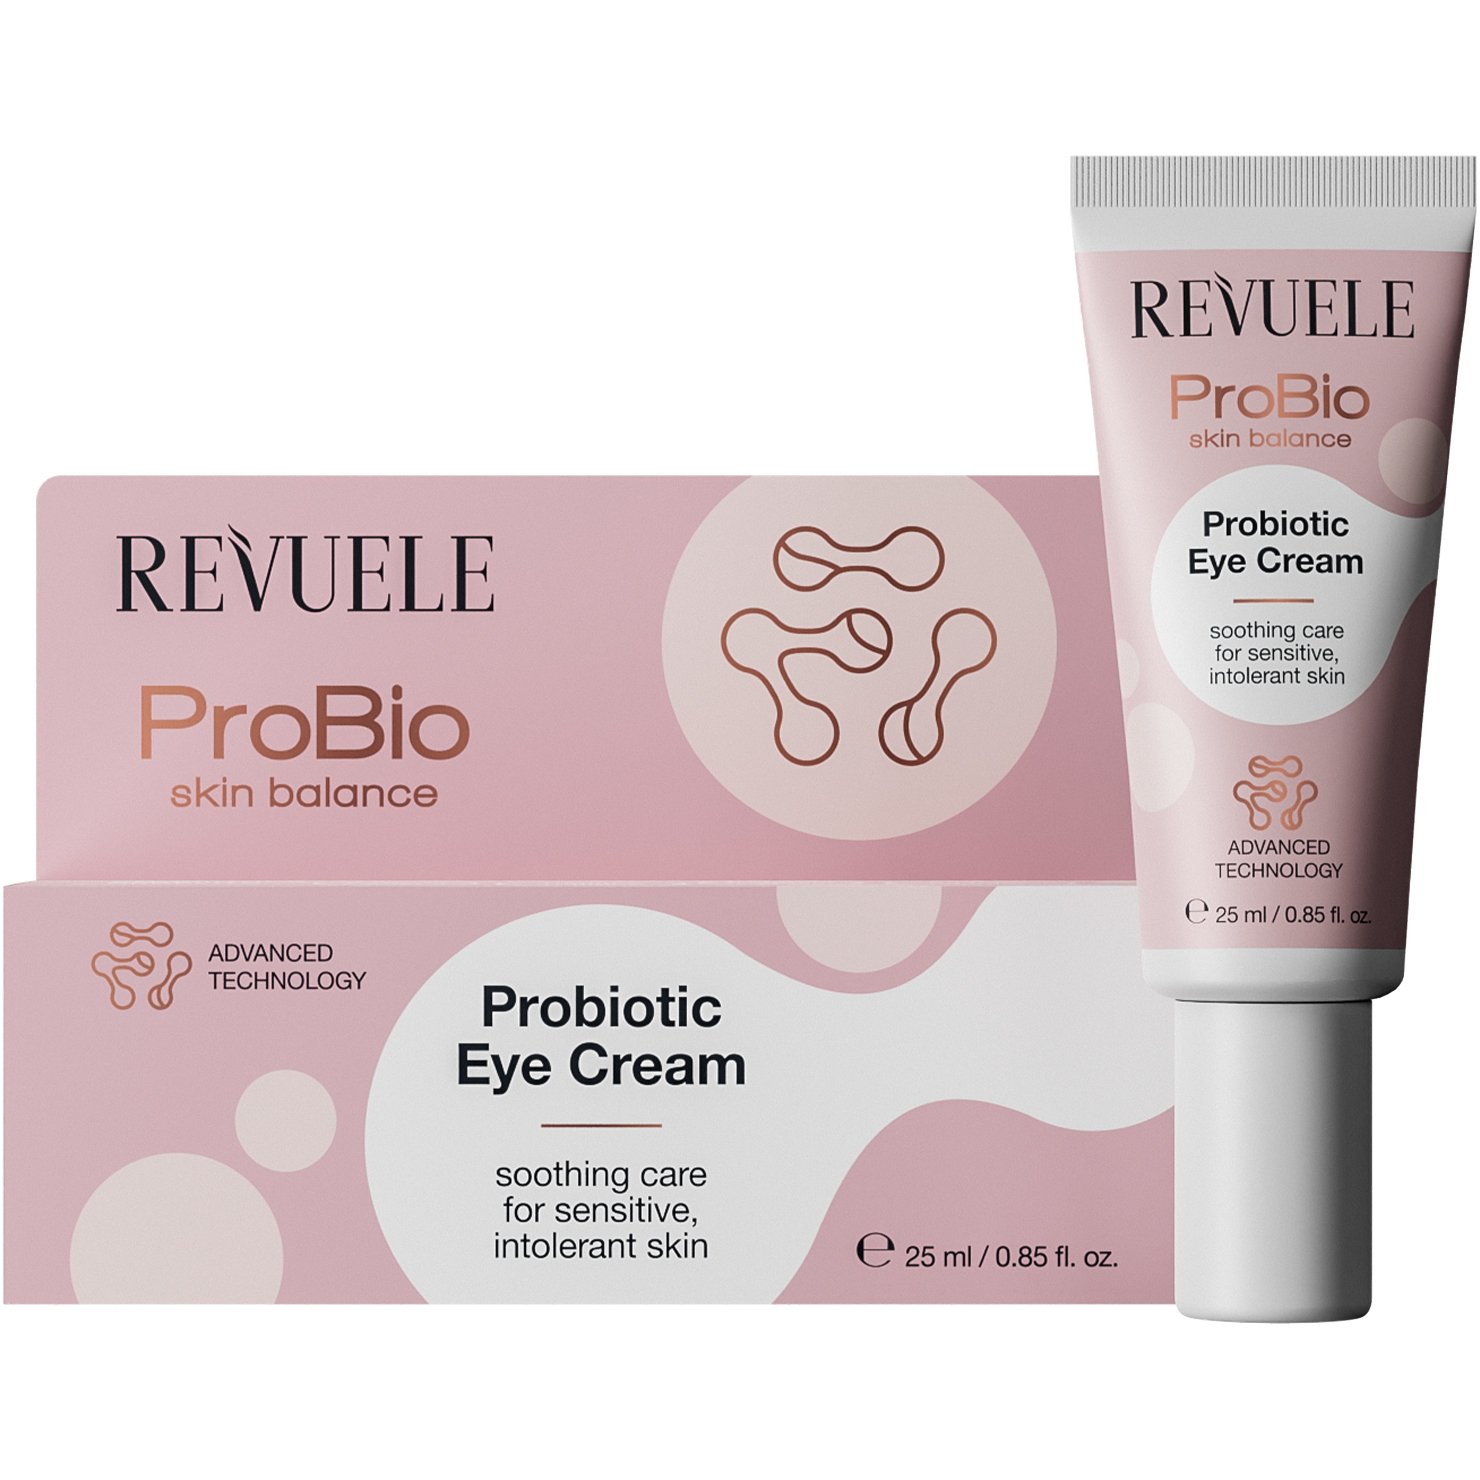 Крем для очей Revuele Probio Skin Balance Probiotic Eye Cream, 25 мл - фото 1